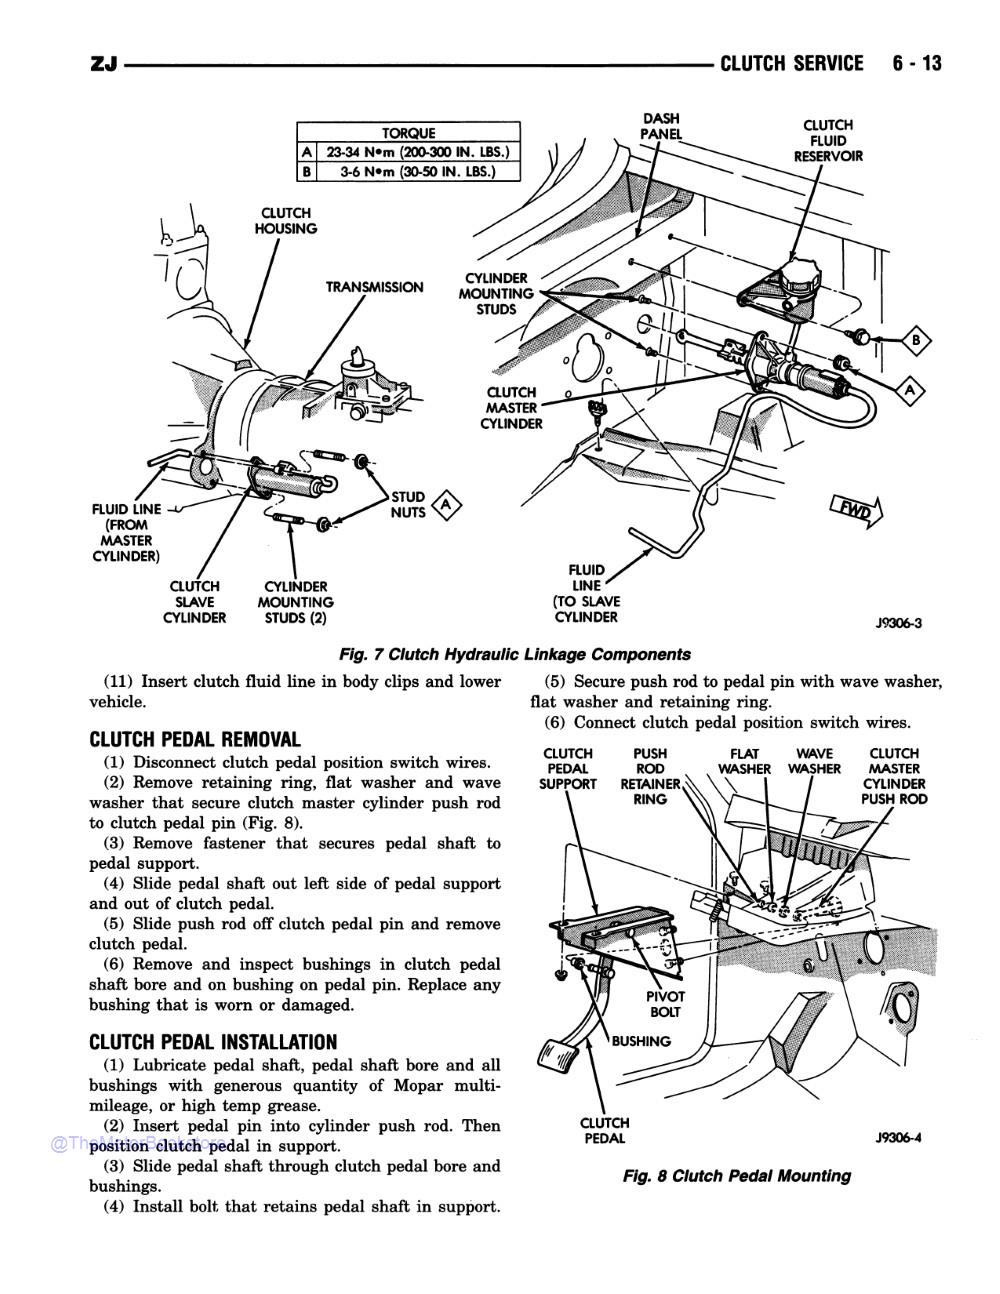 1995 Jeep Grand Cherokee Shop Manual - Sample Page 1